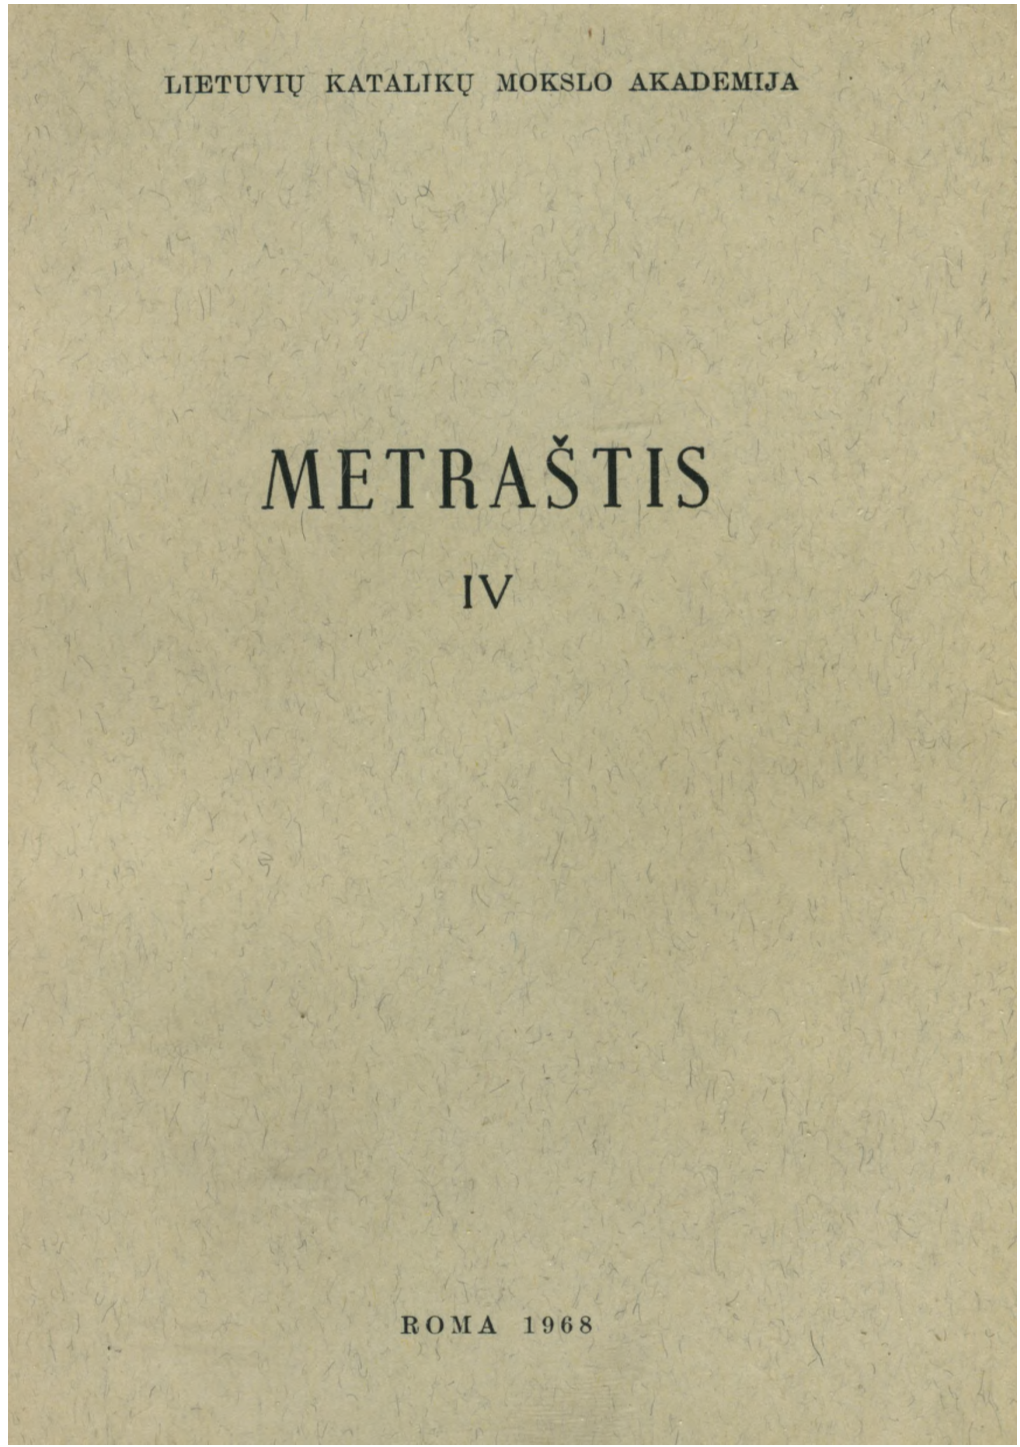 LKMA-Metrastis-IV-1968.Pdf